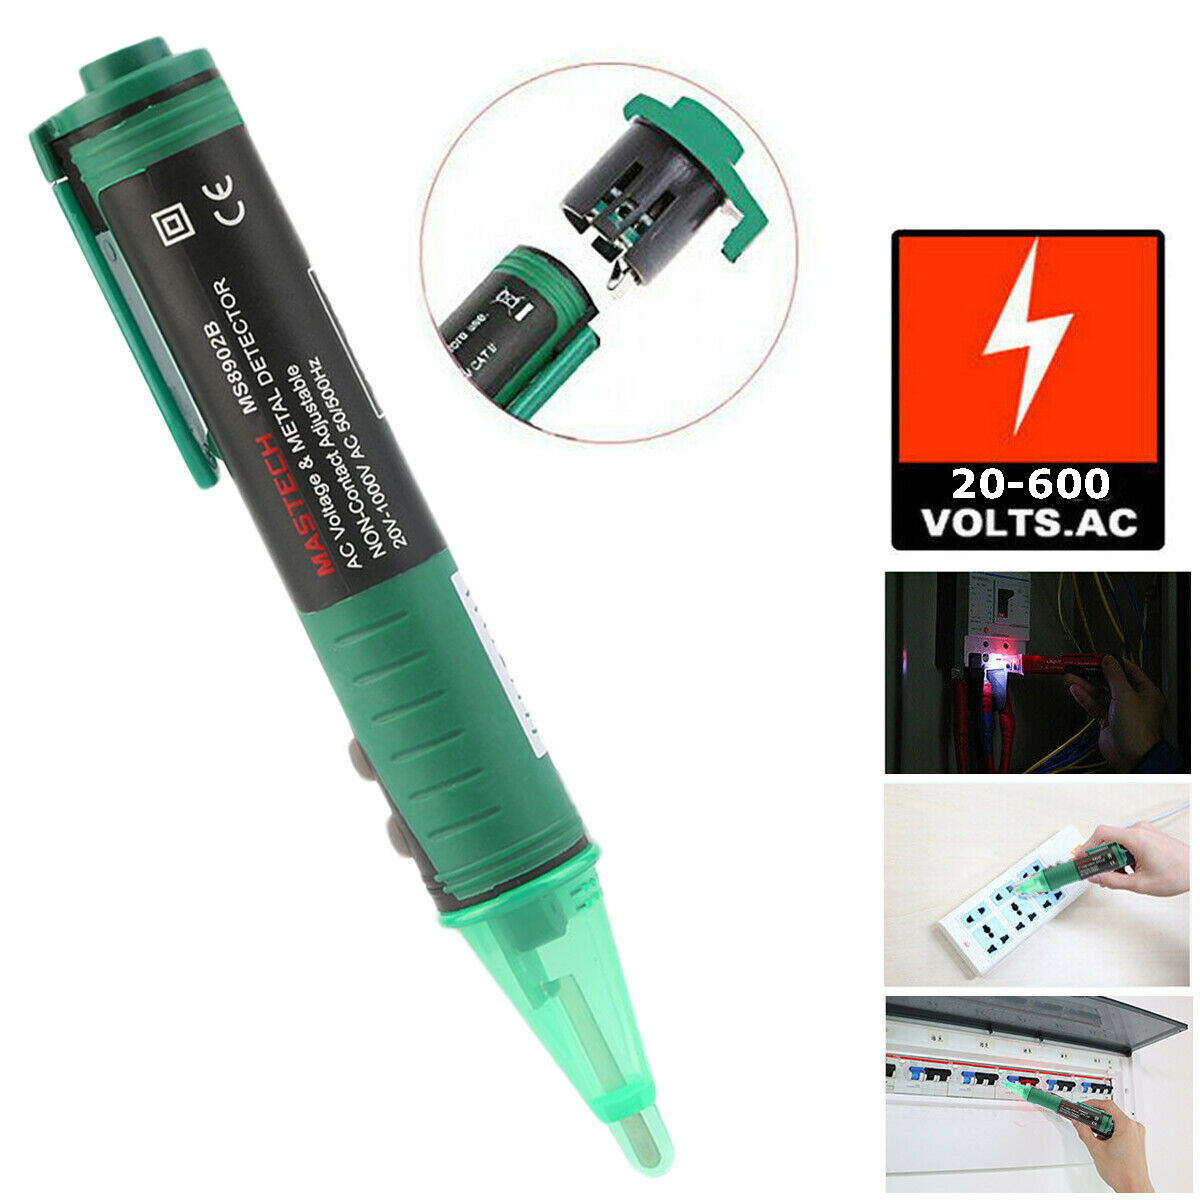 Details about  / 12-1000V Voltage Tester Pen Electric Volt Alert Detector Non-Contact AC Sensor#